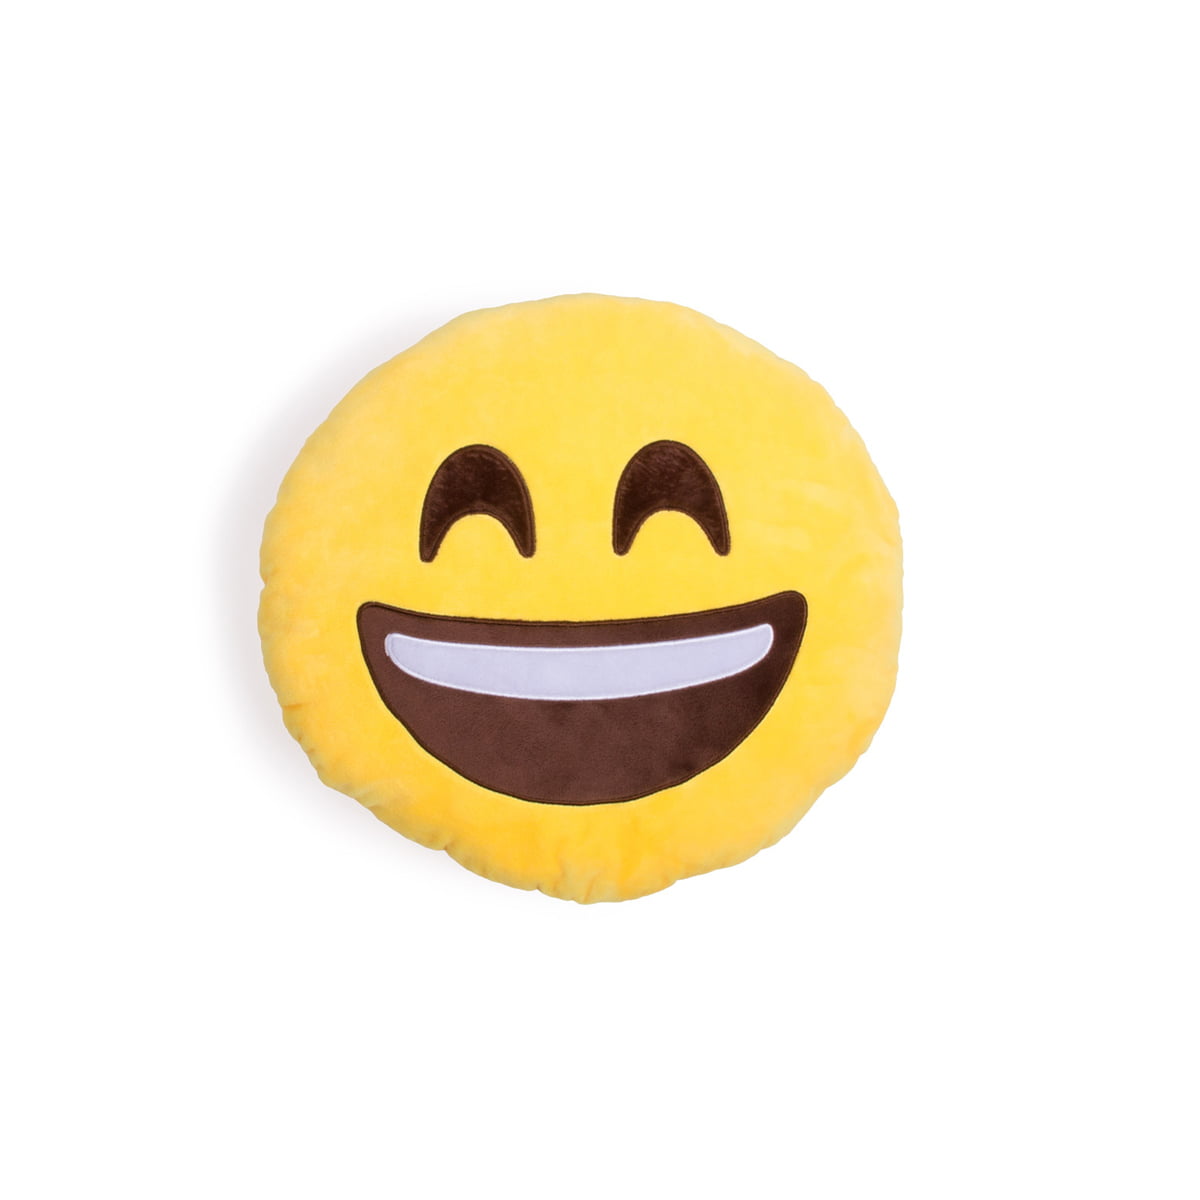 Emoji Pillow soft Round Yellow smiling face sweat Emoticon Stuffed Plush Cushion 